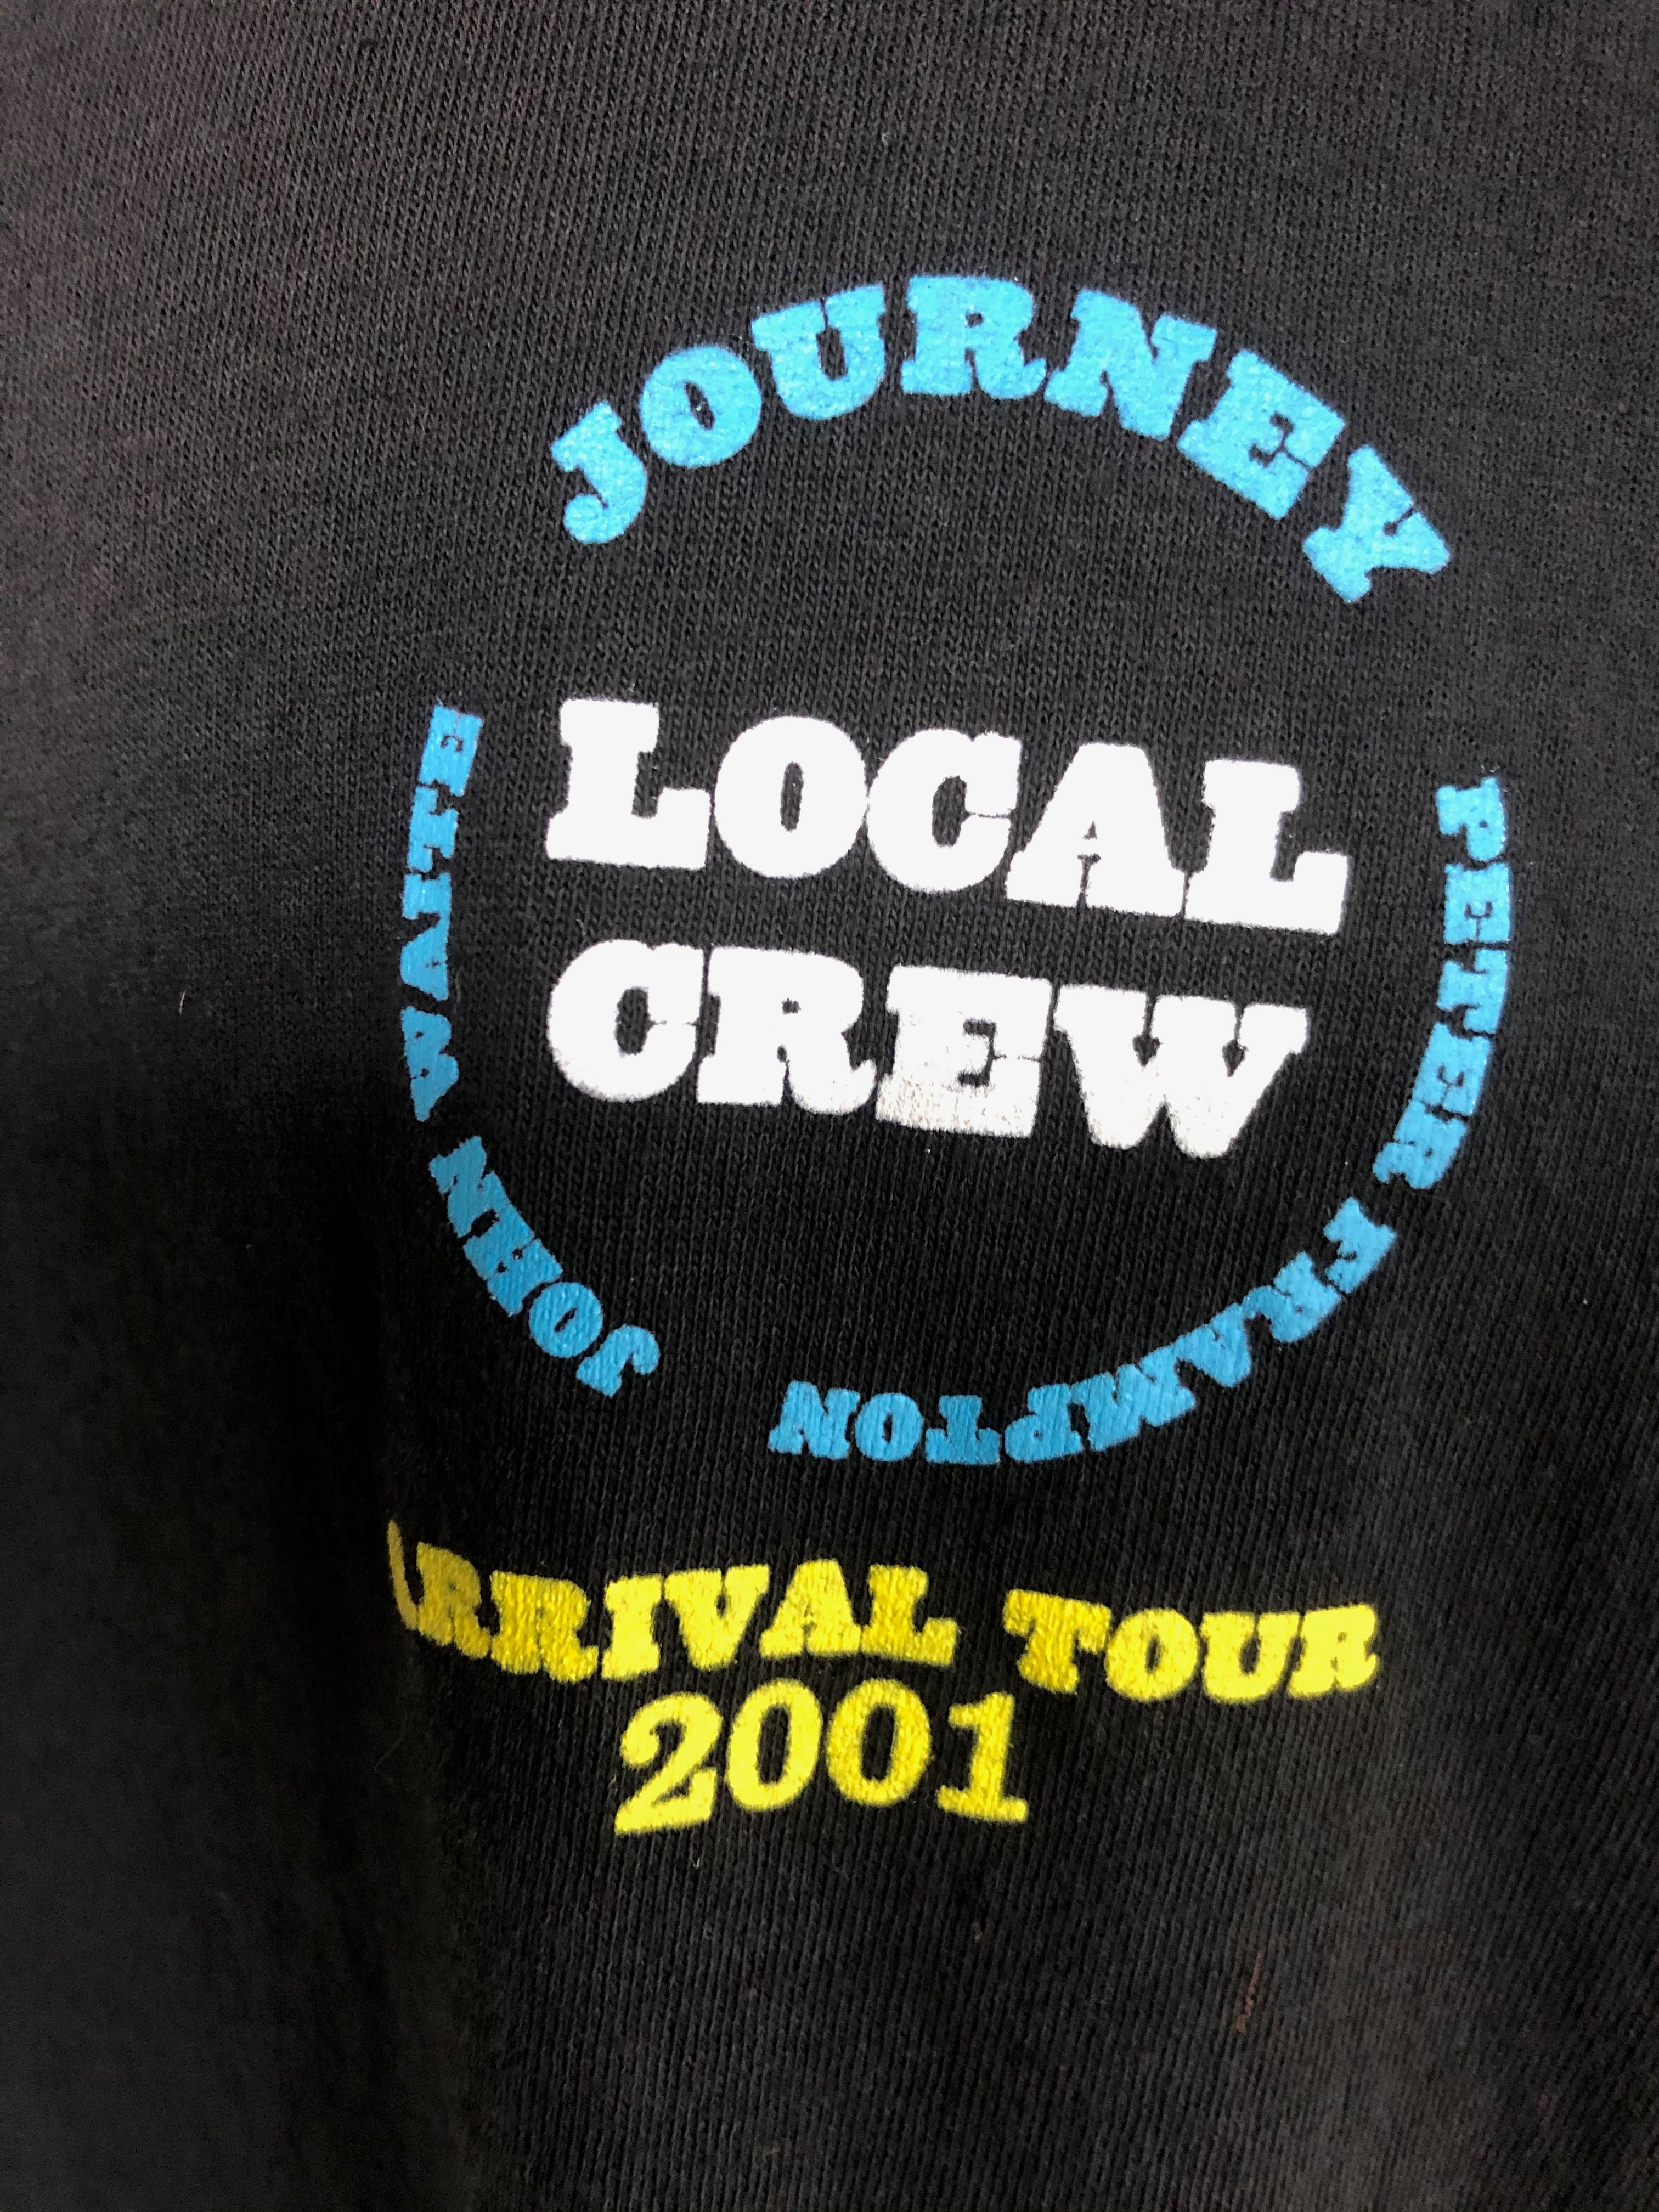 Authentic Journey Tour Tour Tee- Arrival Tour 2001/ Local Crew Tee